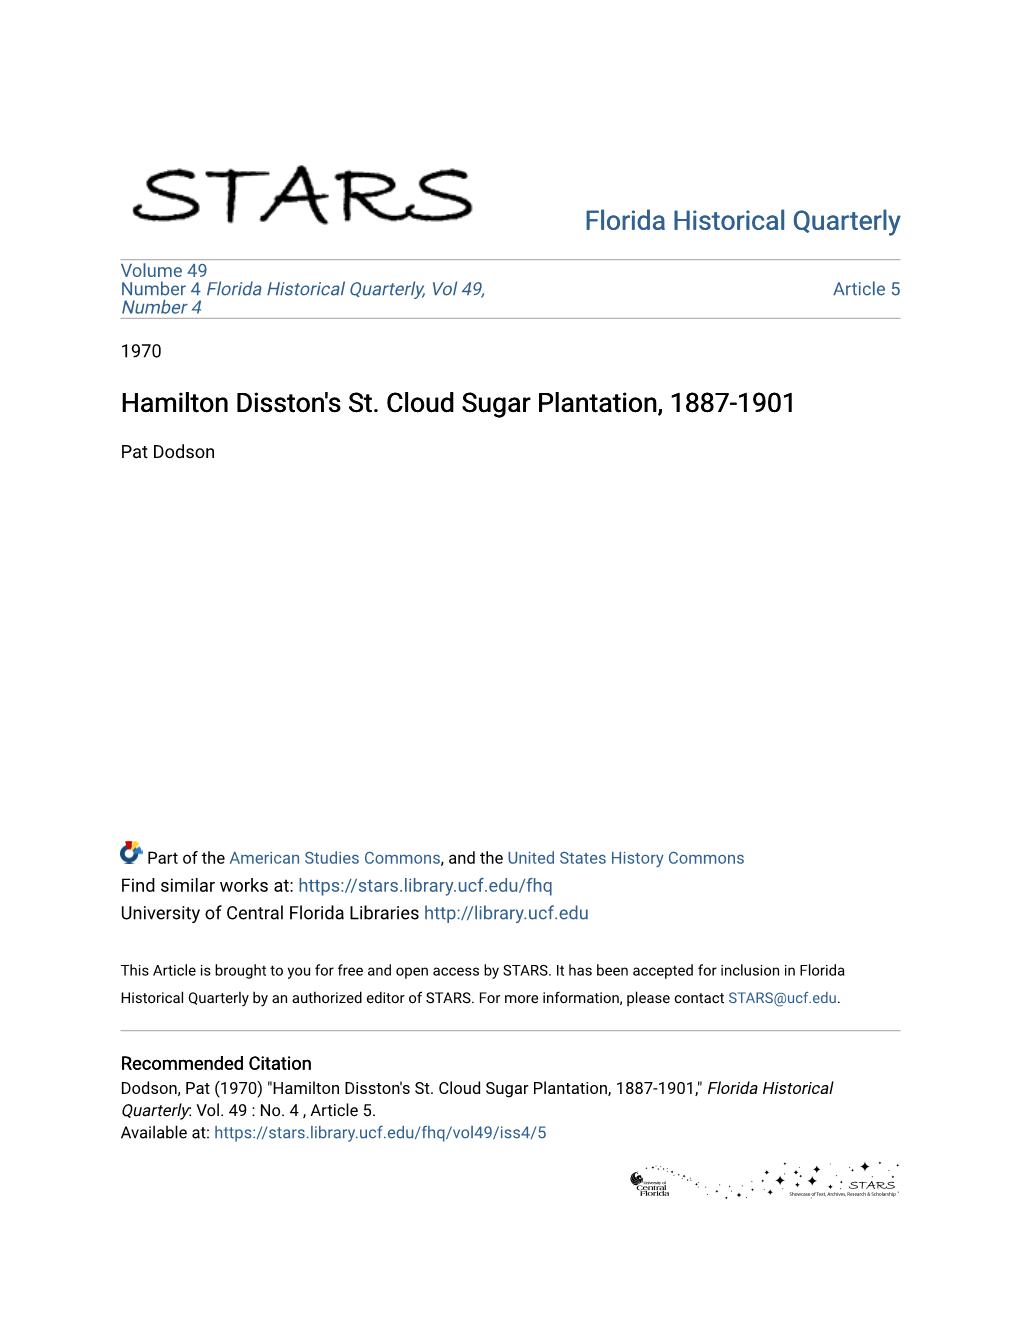 Hamilton Disston's St. Cloud Sugar Plantation, 1887-1901